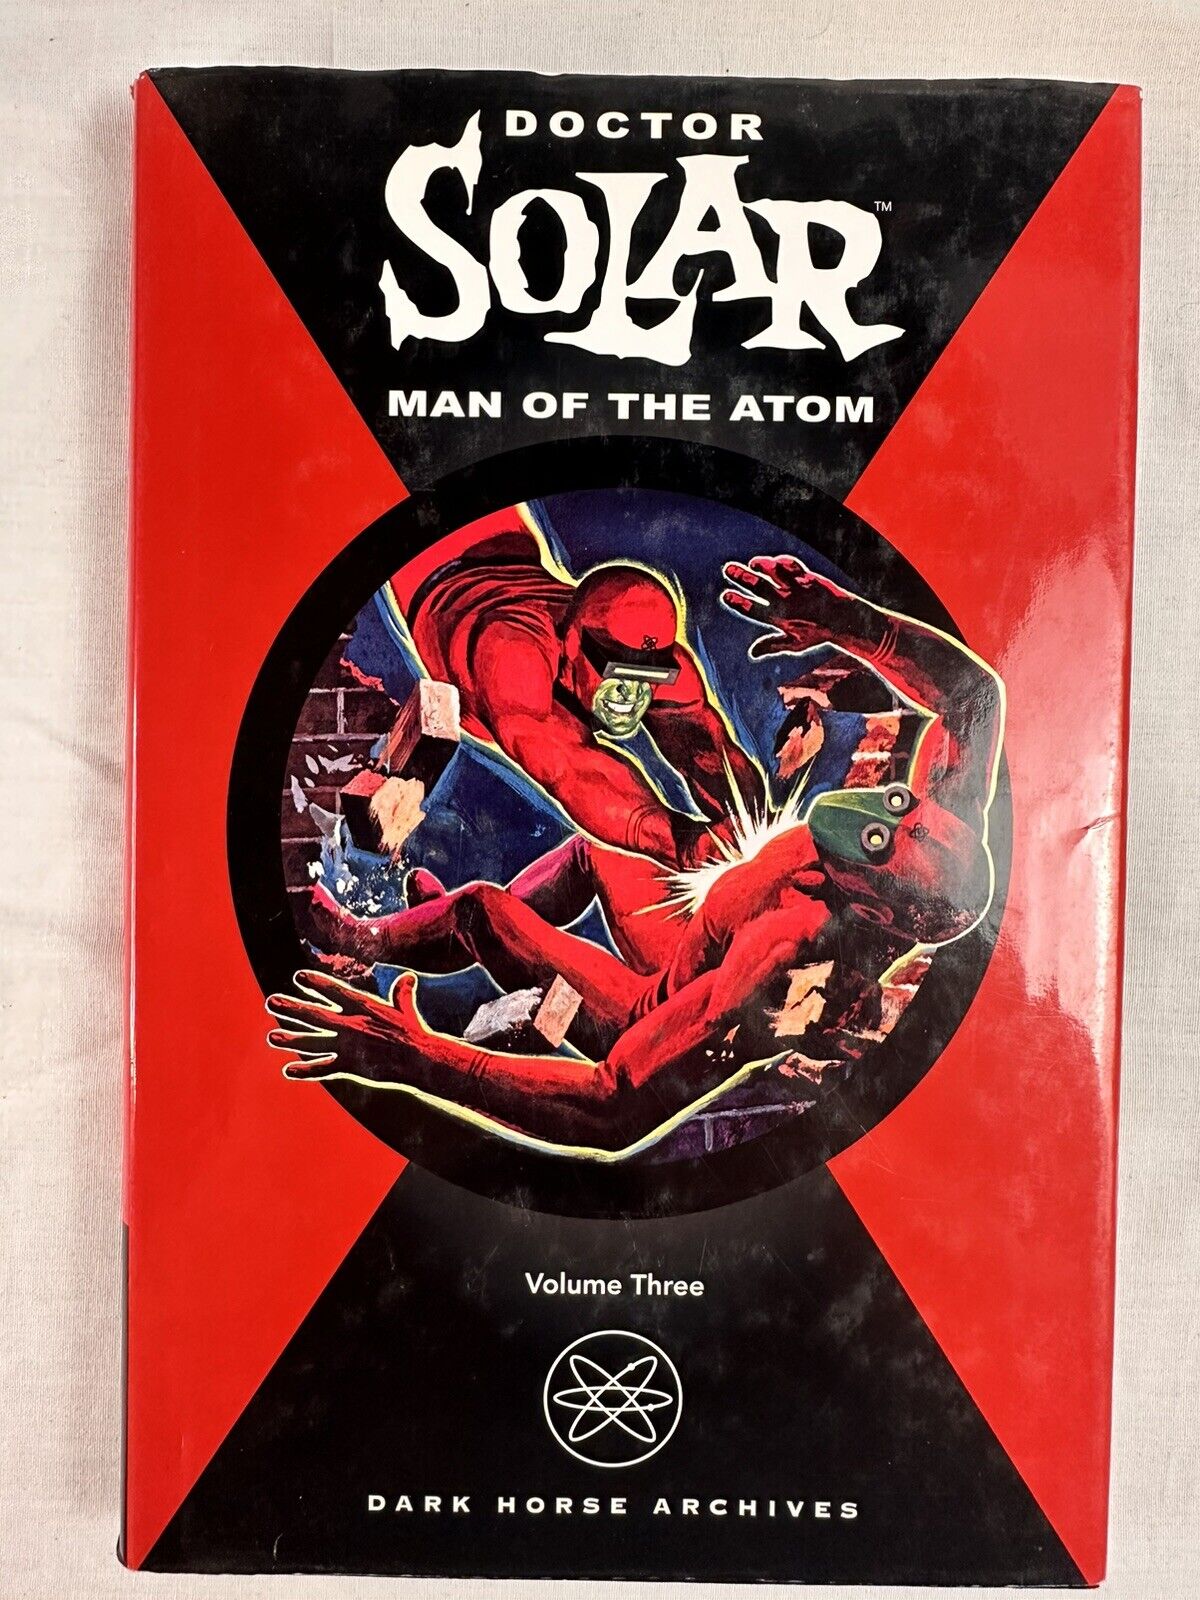 Doctor Solar, Man of the Atom Vol 3 Hardcover (Dark Horse Archives, 2005) OOP